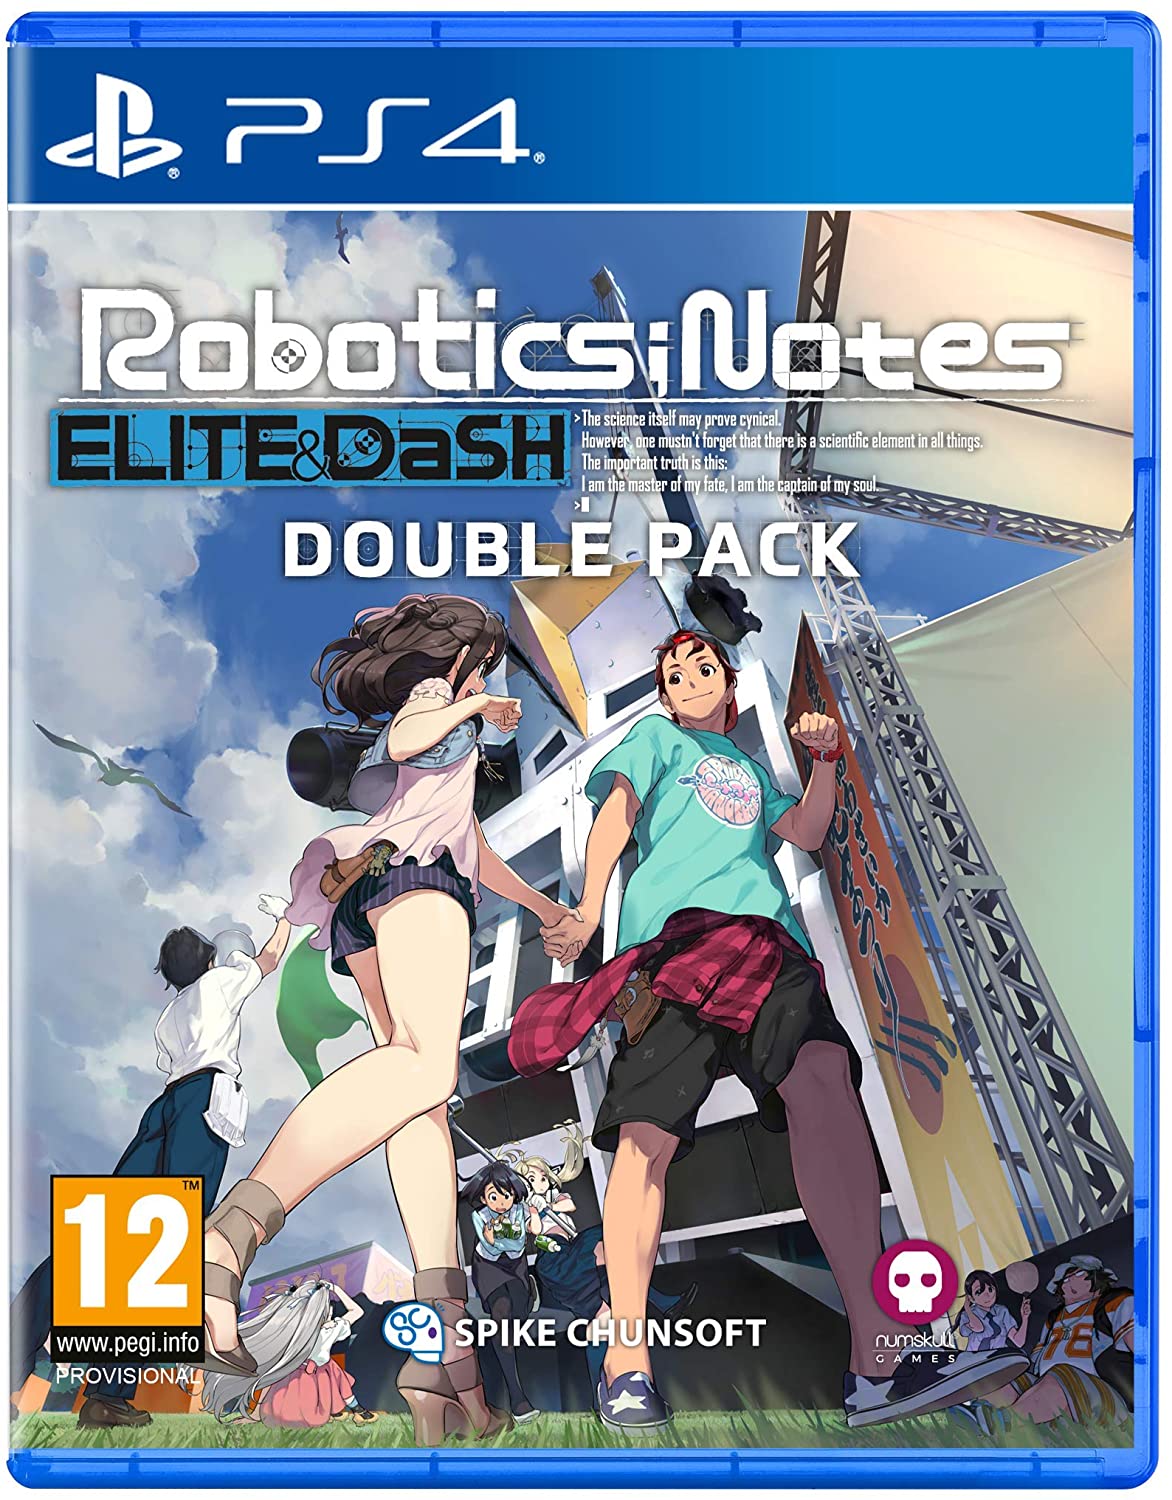 Robotics; Notes Double Pack (PS4)